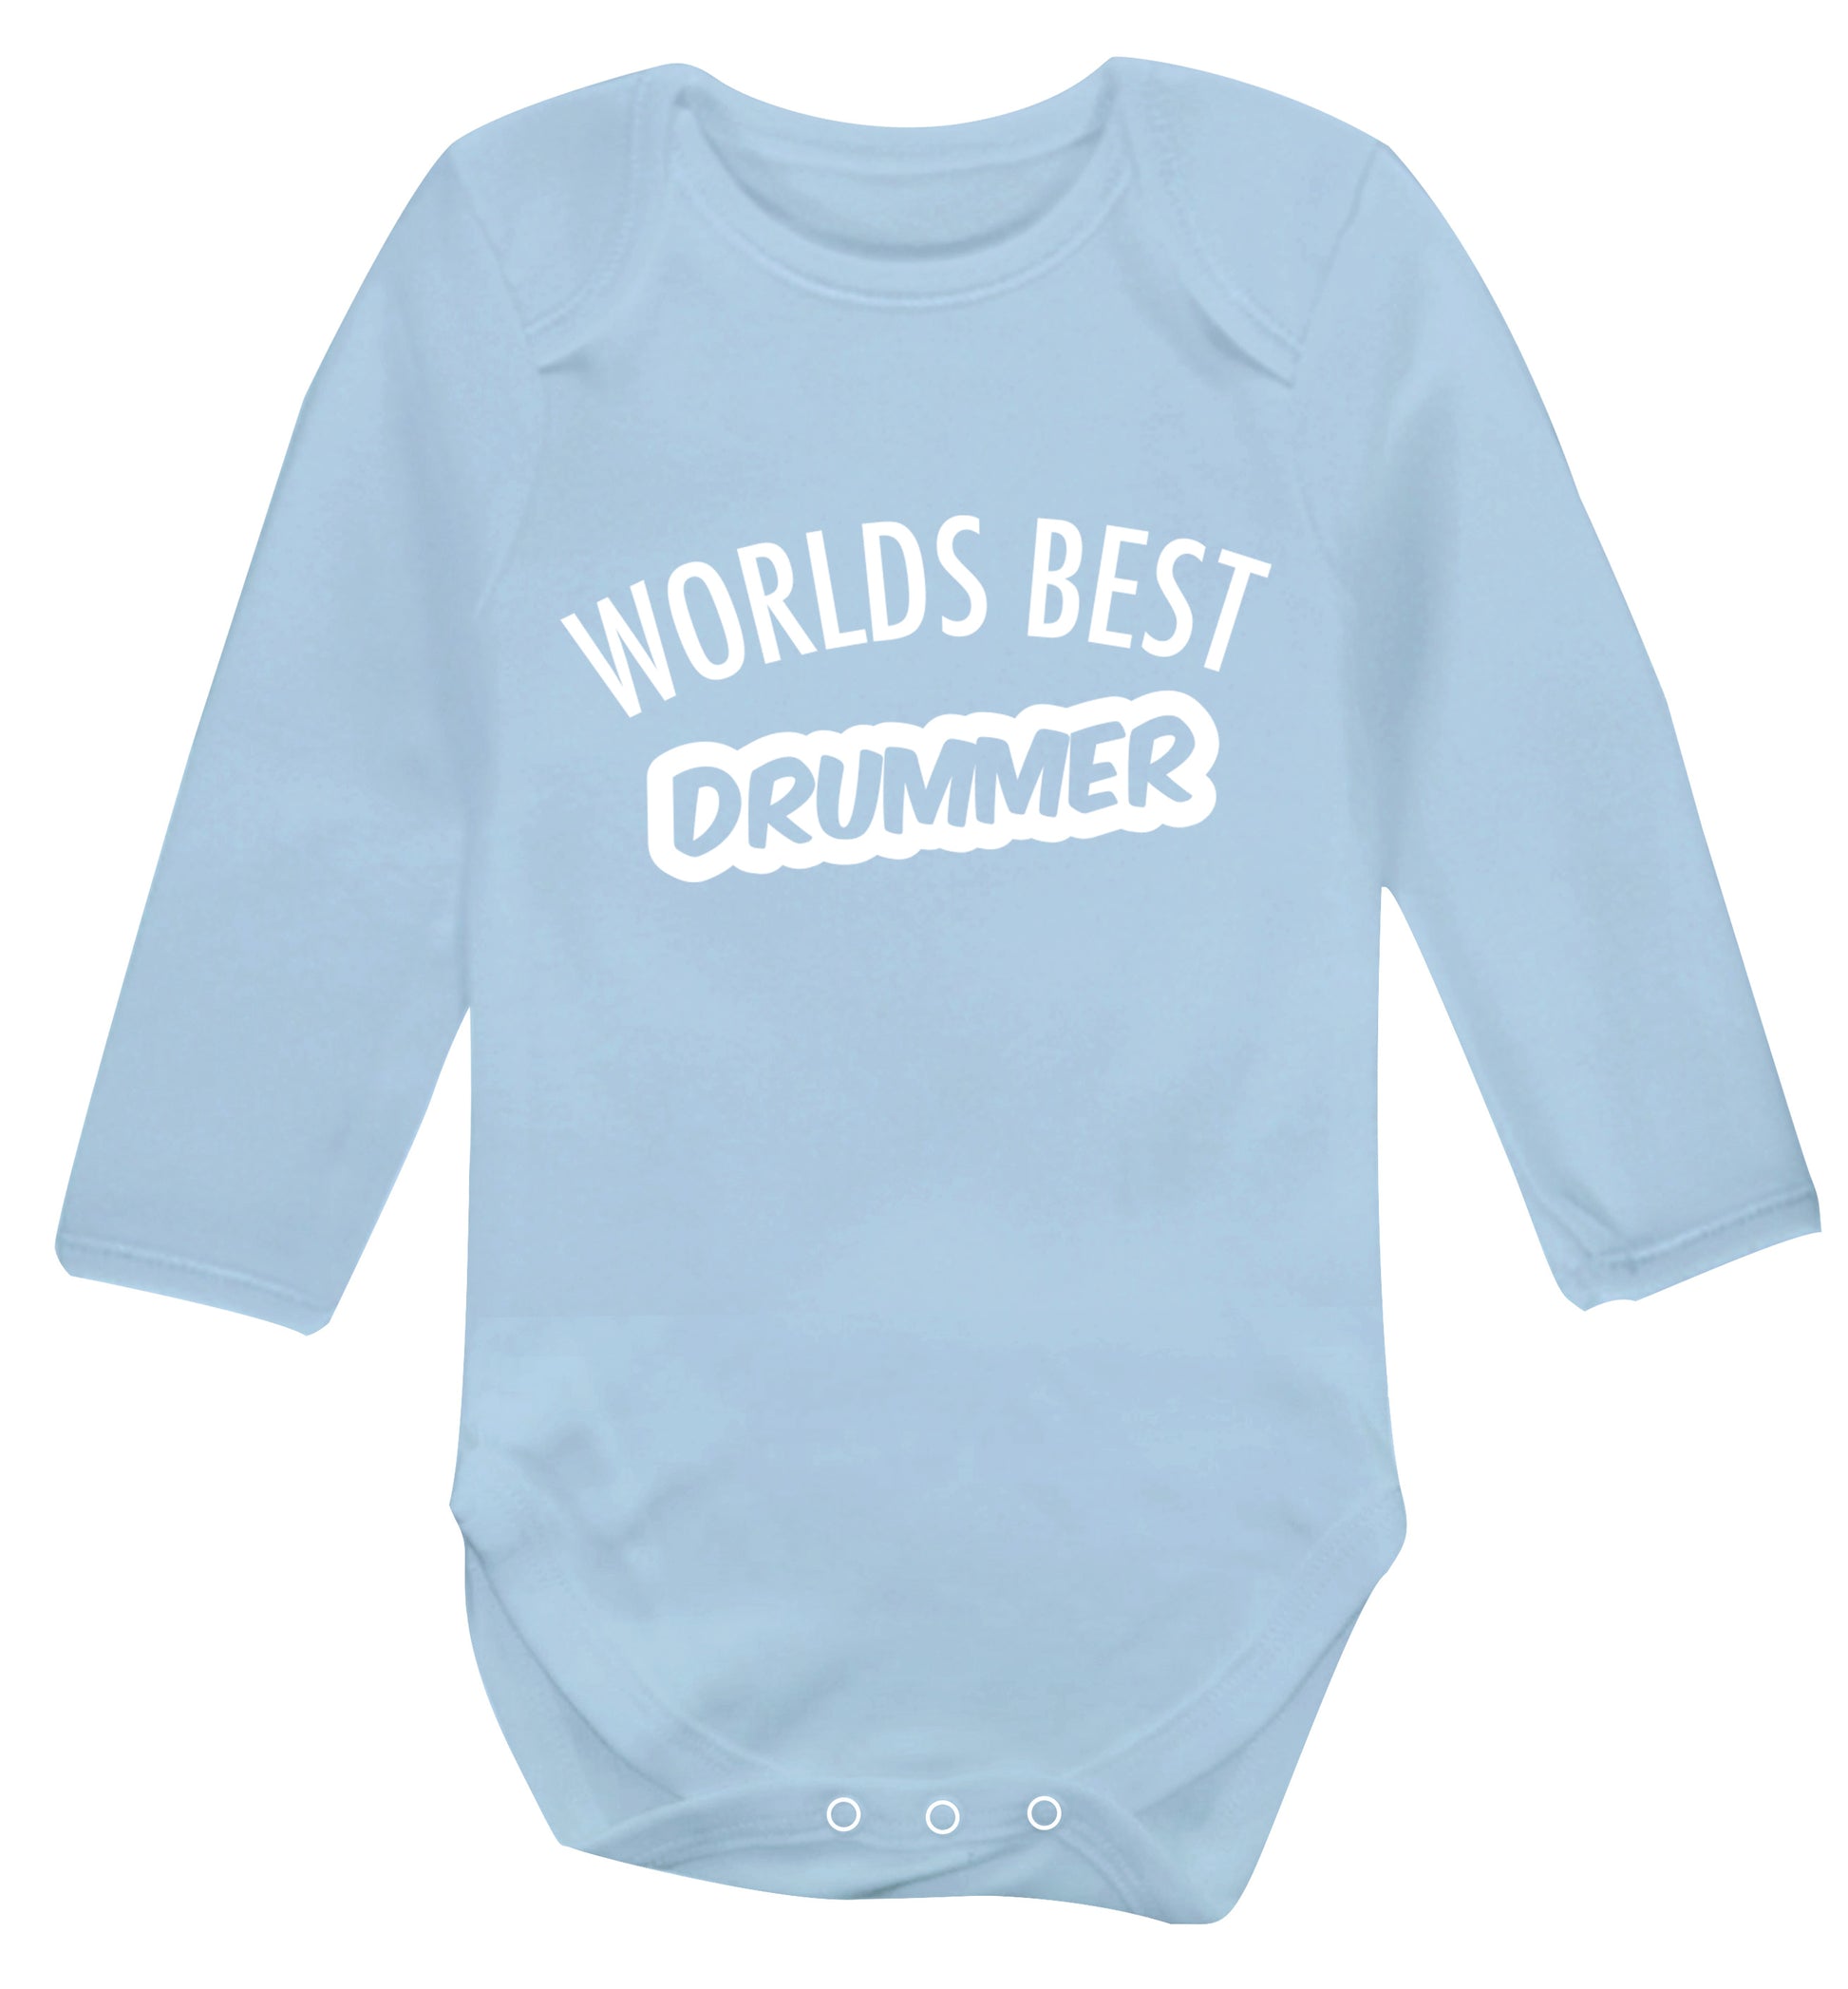 Worlds best drummer Baby Vest long sleeved pale blue 6-12 months